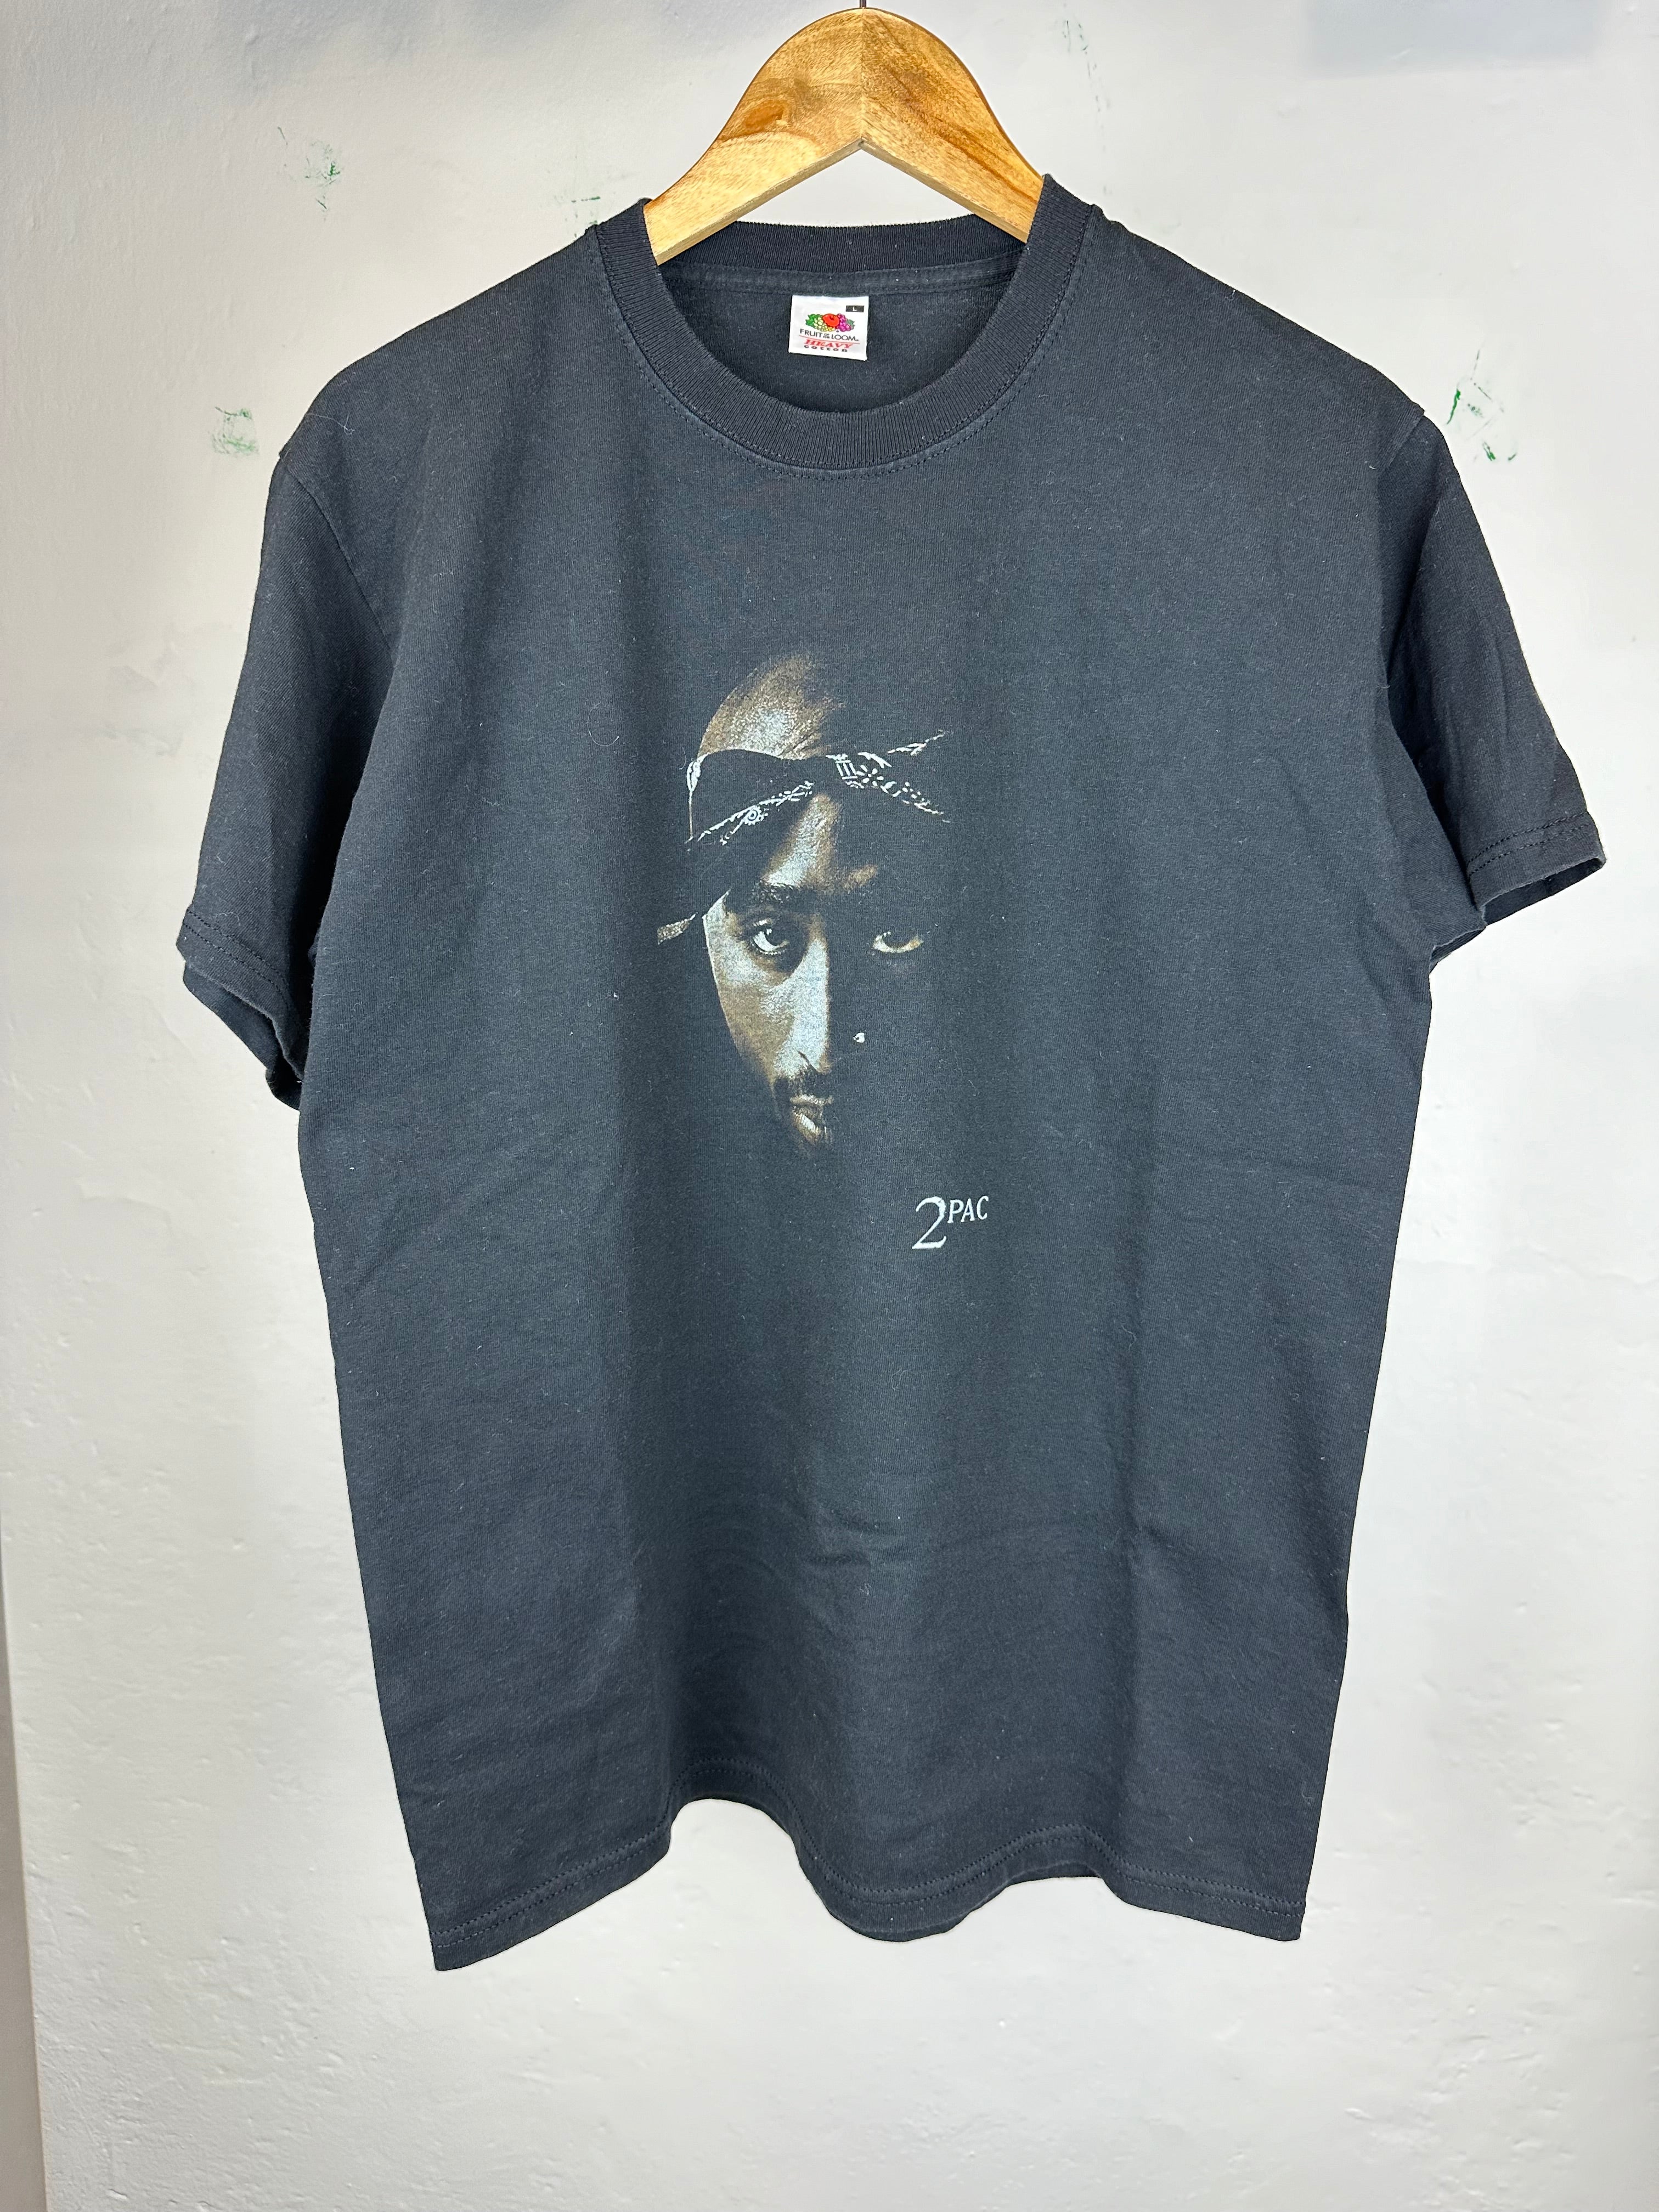 Vintage Tupac Shakur t-shirt - size L